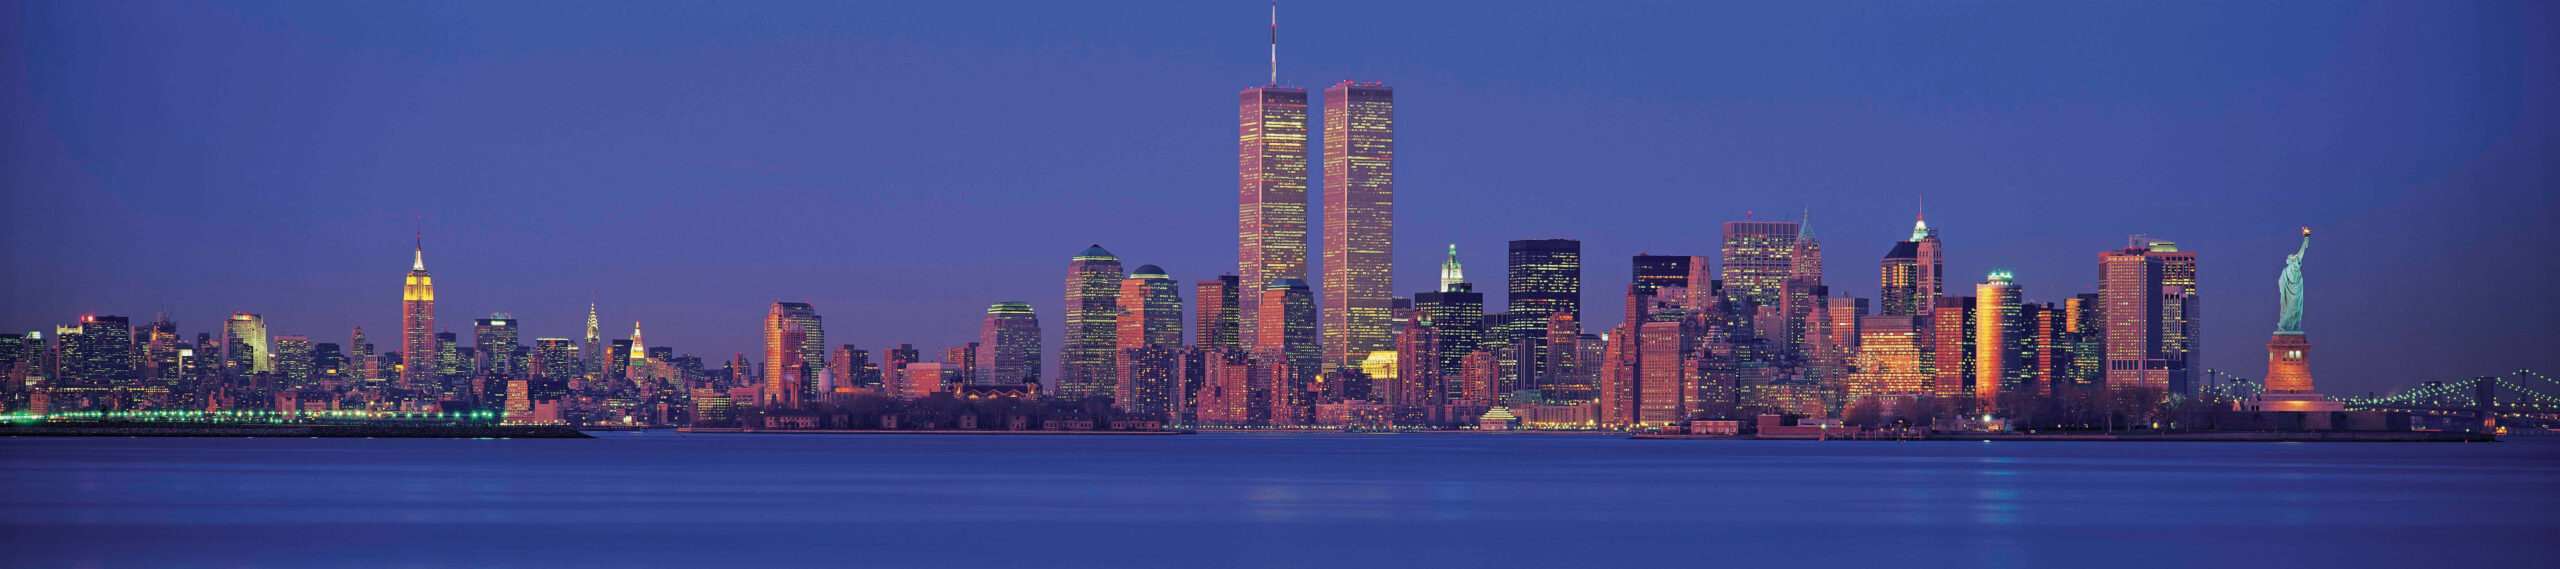 New York skyline from Jersey City. Richard Berenholtz, 1999.